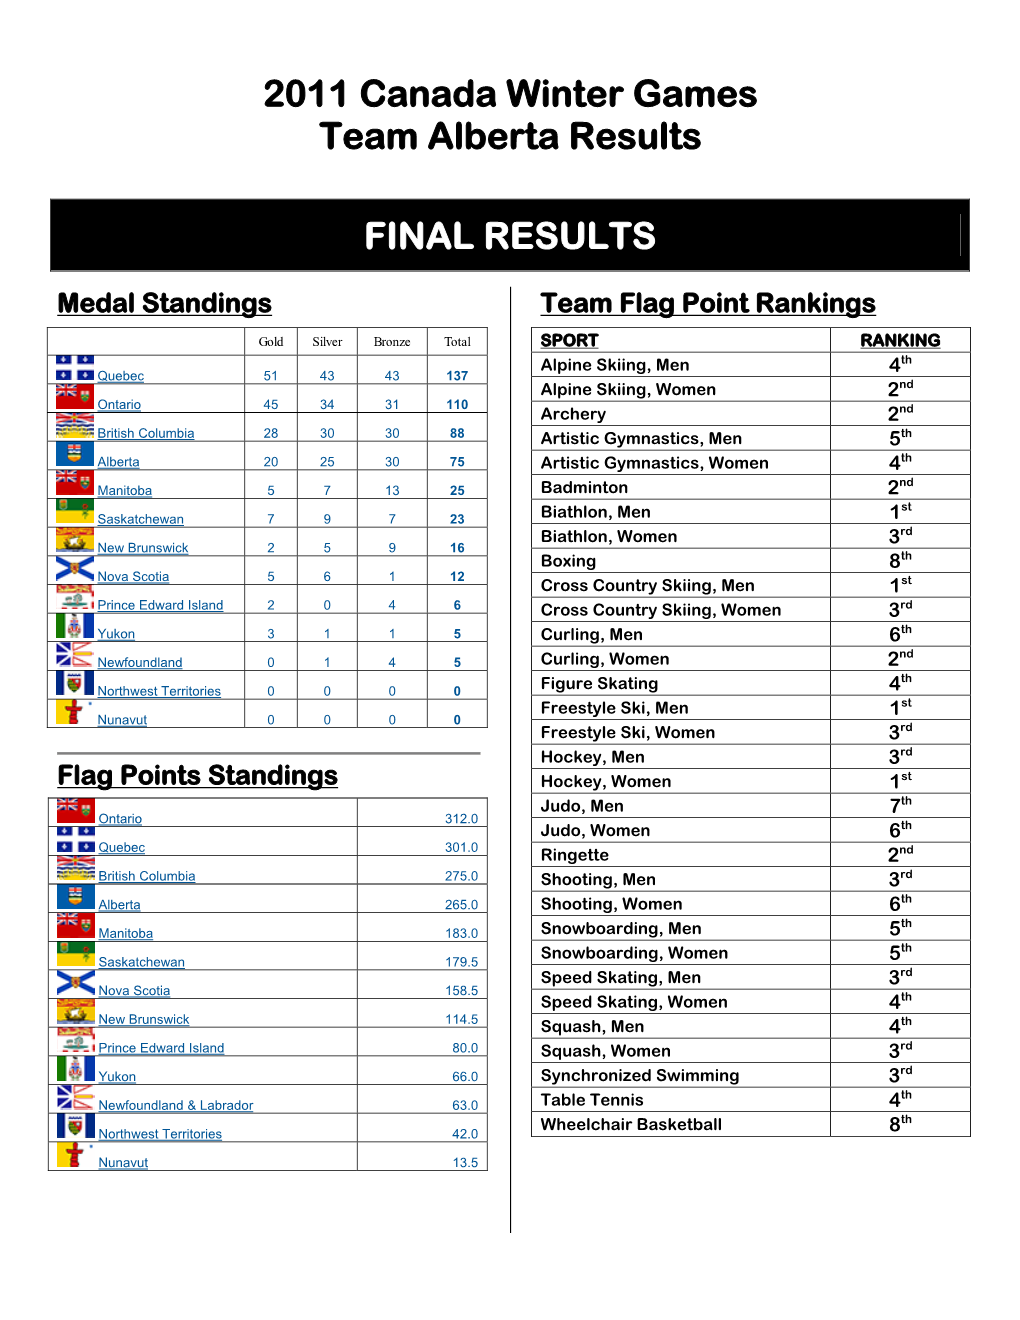 2011 Canada Winter Games Team Alberta Results FINAL RESULTS